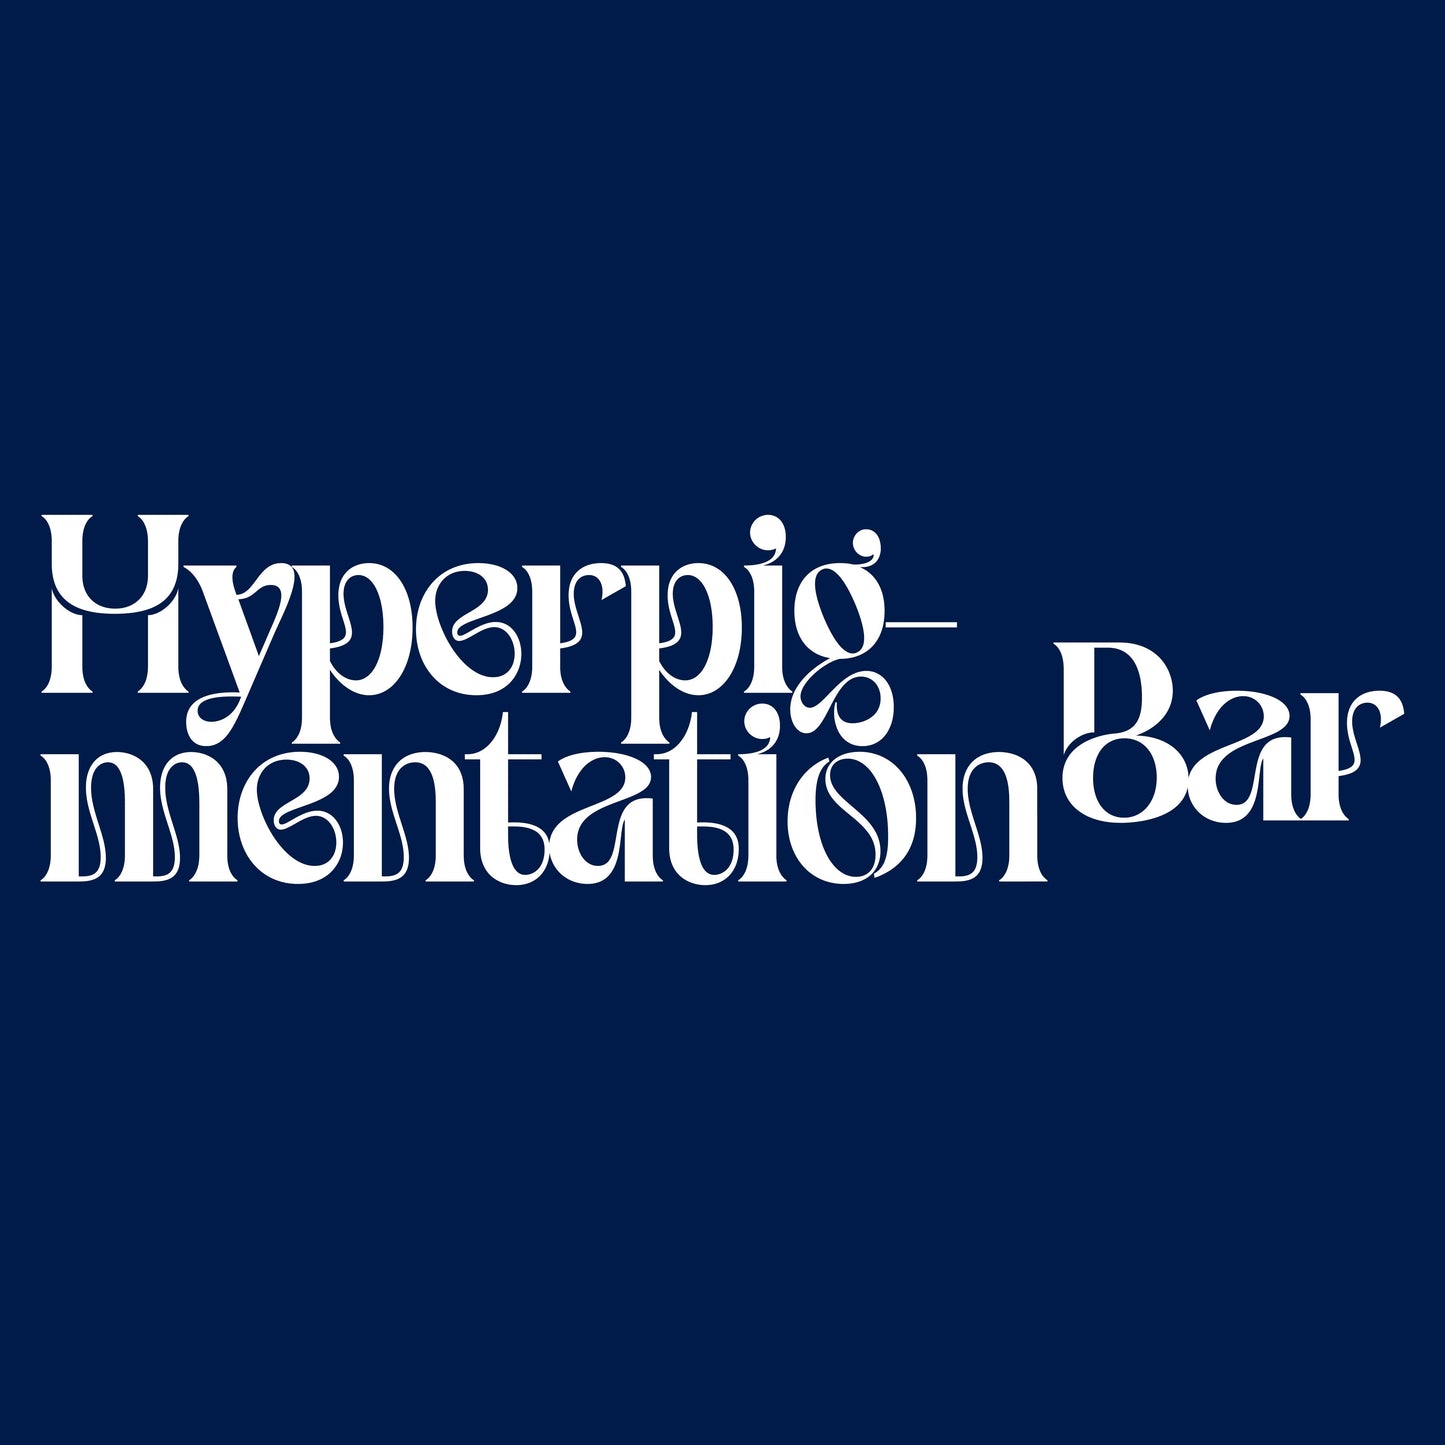 Hyperpigmentation Bar